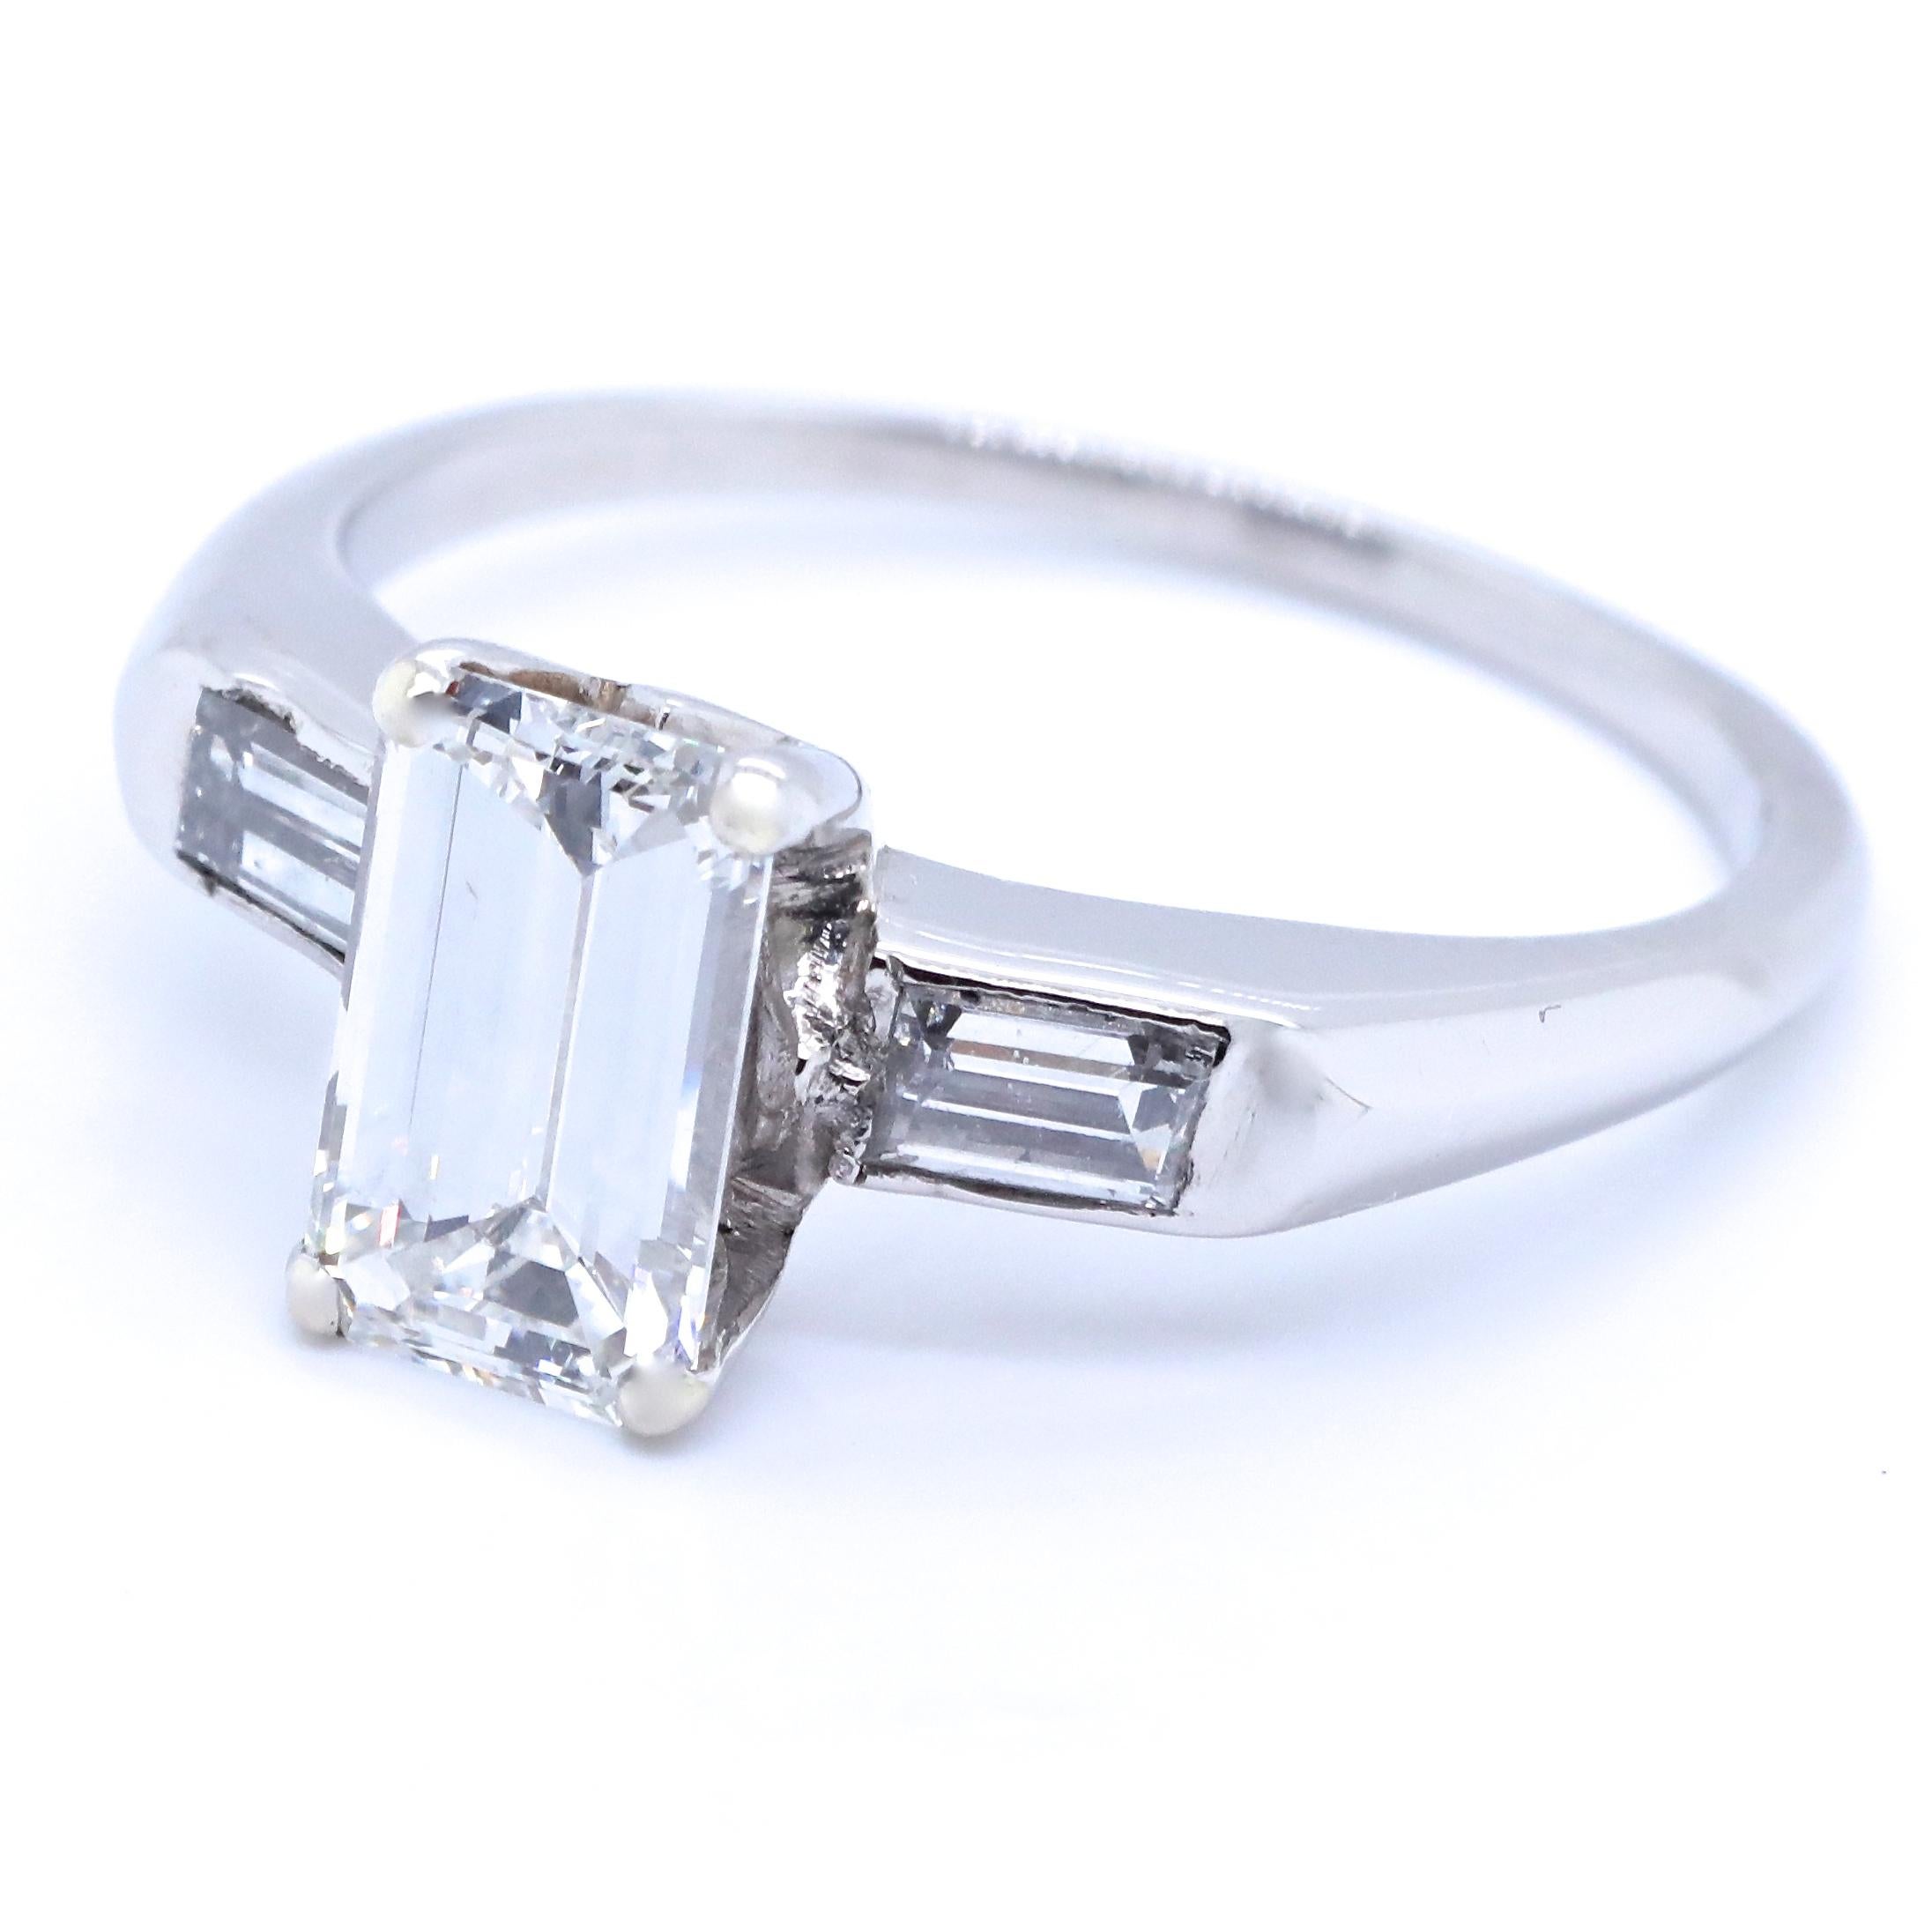 1950s GIA 0.96 Carat G VVS2 Emerald Cut Diamond Platinum Engagement Ring 1